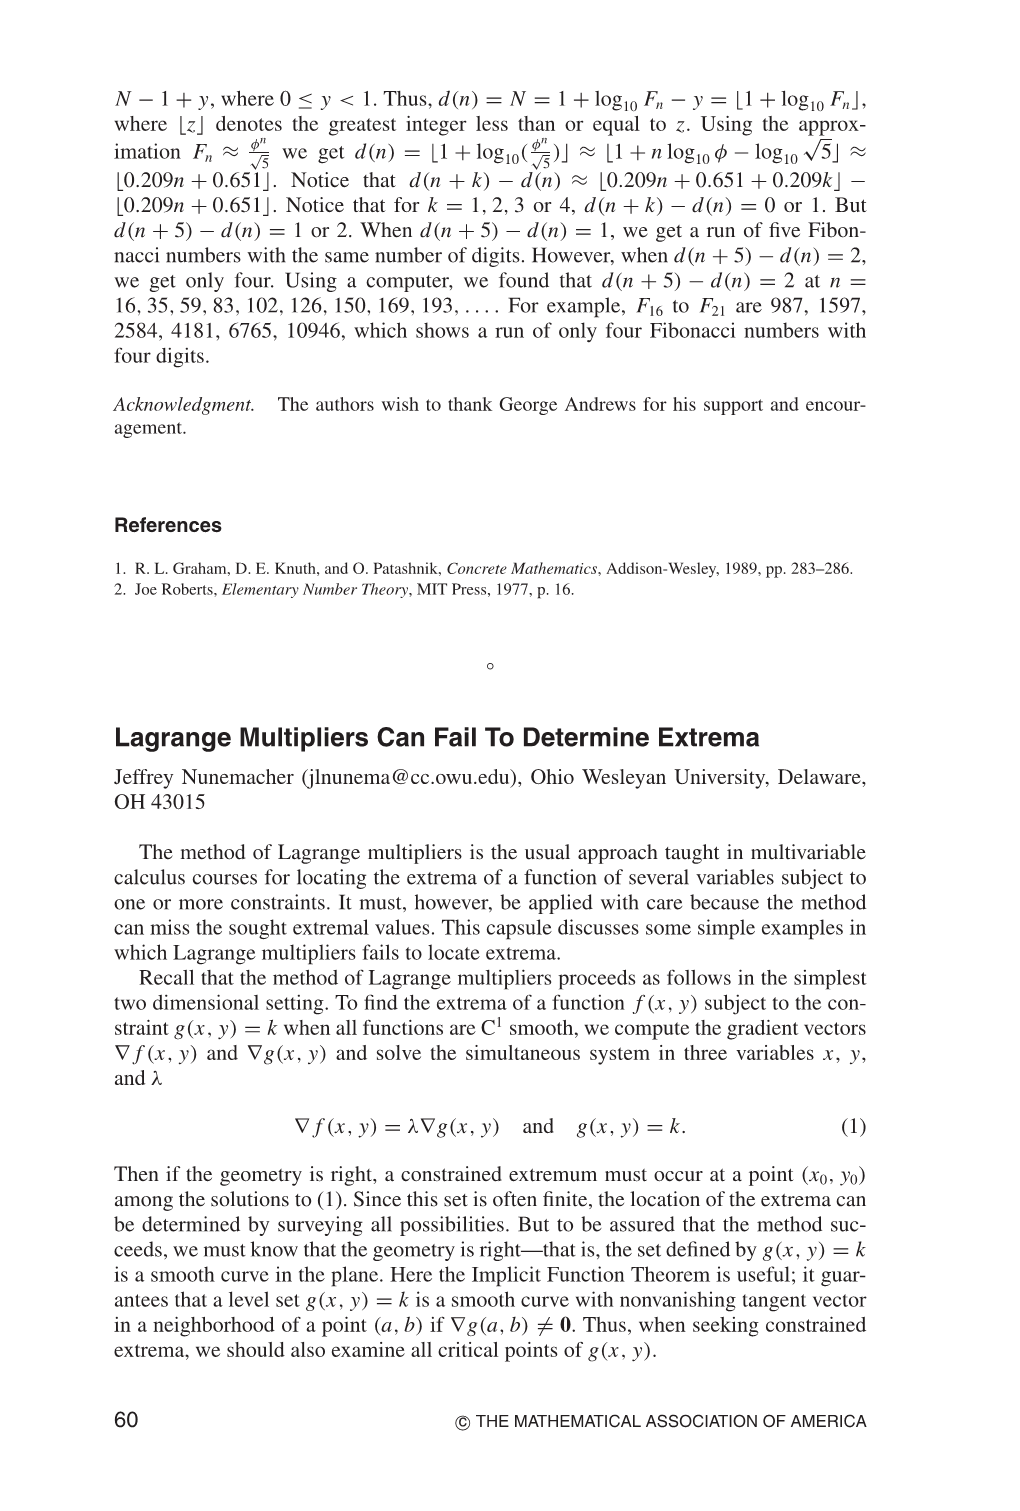 Lagrange Multipliers Can Fail to Determine Extrema Jeffrey Nunemacher (Jlnunema@Cc.Owu.Edu), Ohio Wesleyan University, Delaware, OH 43015